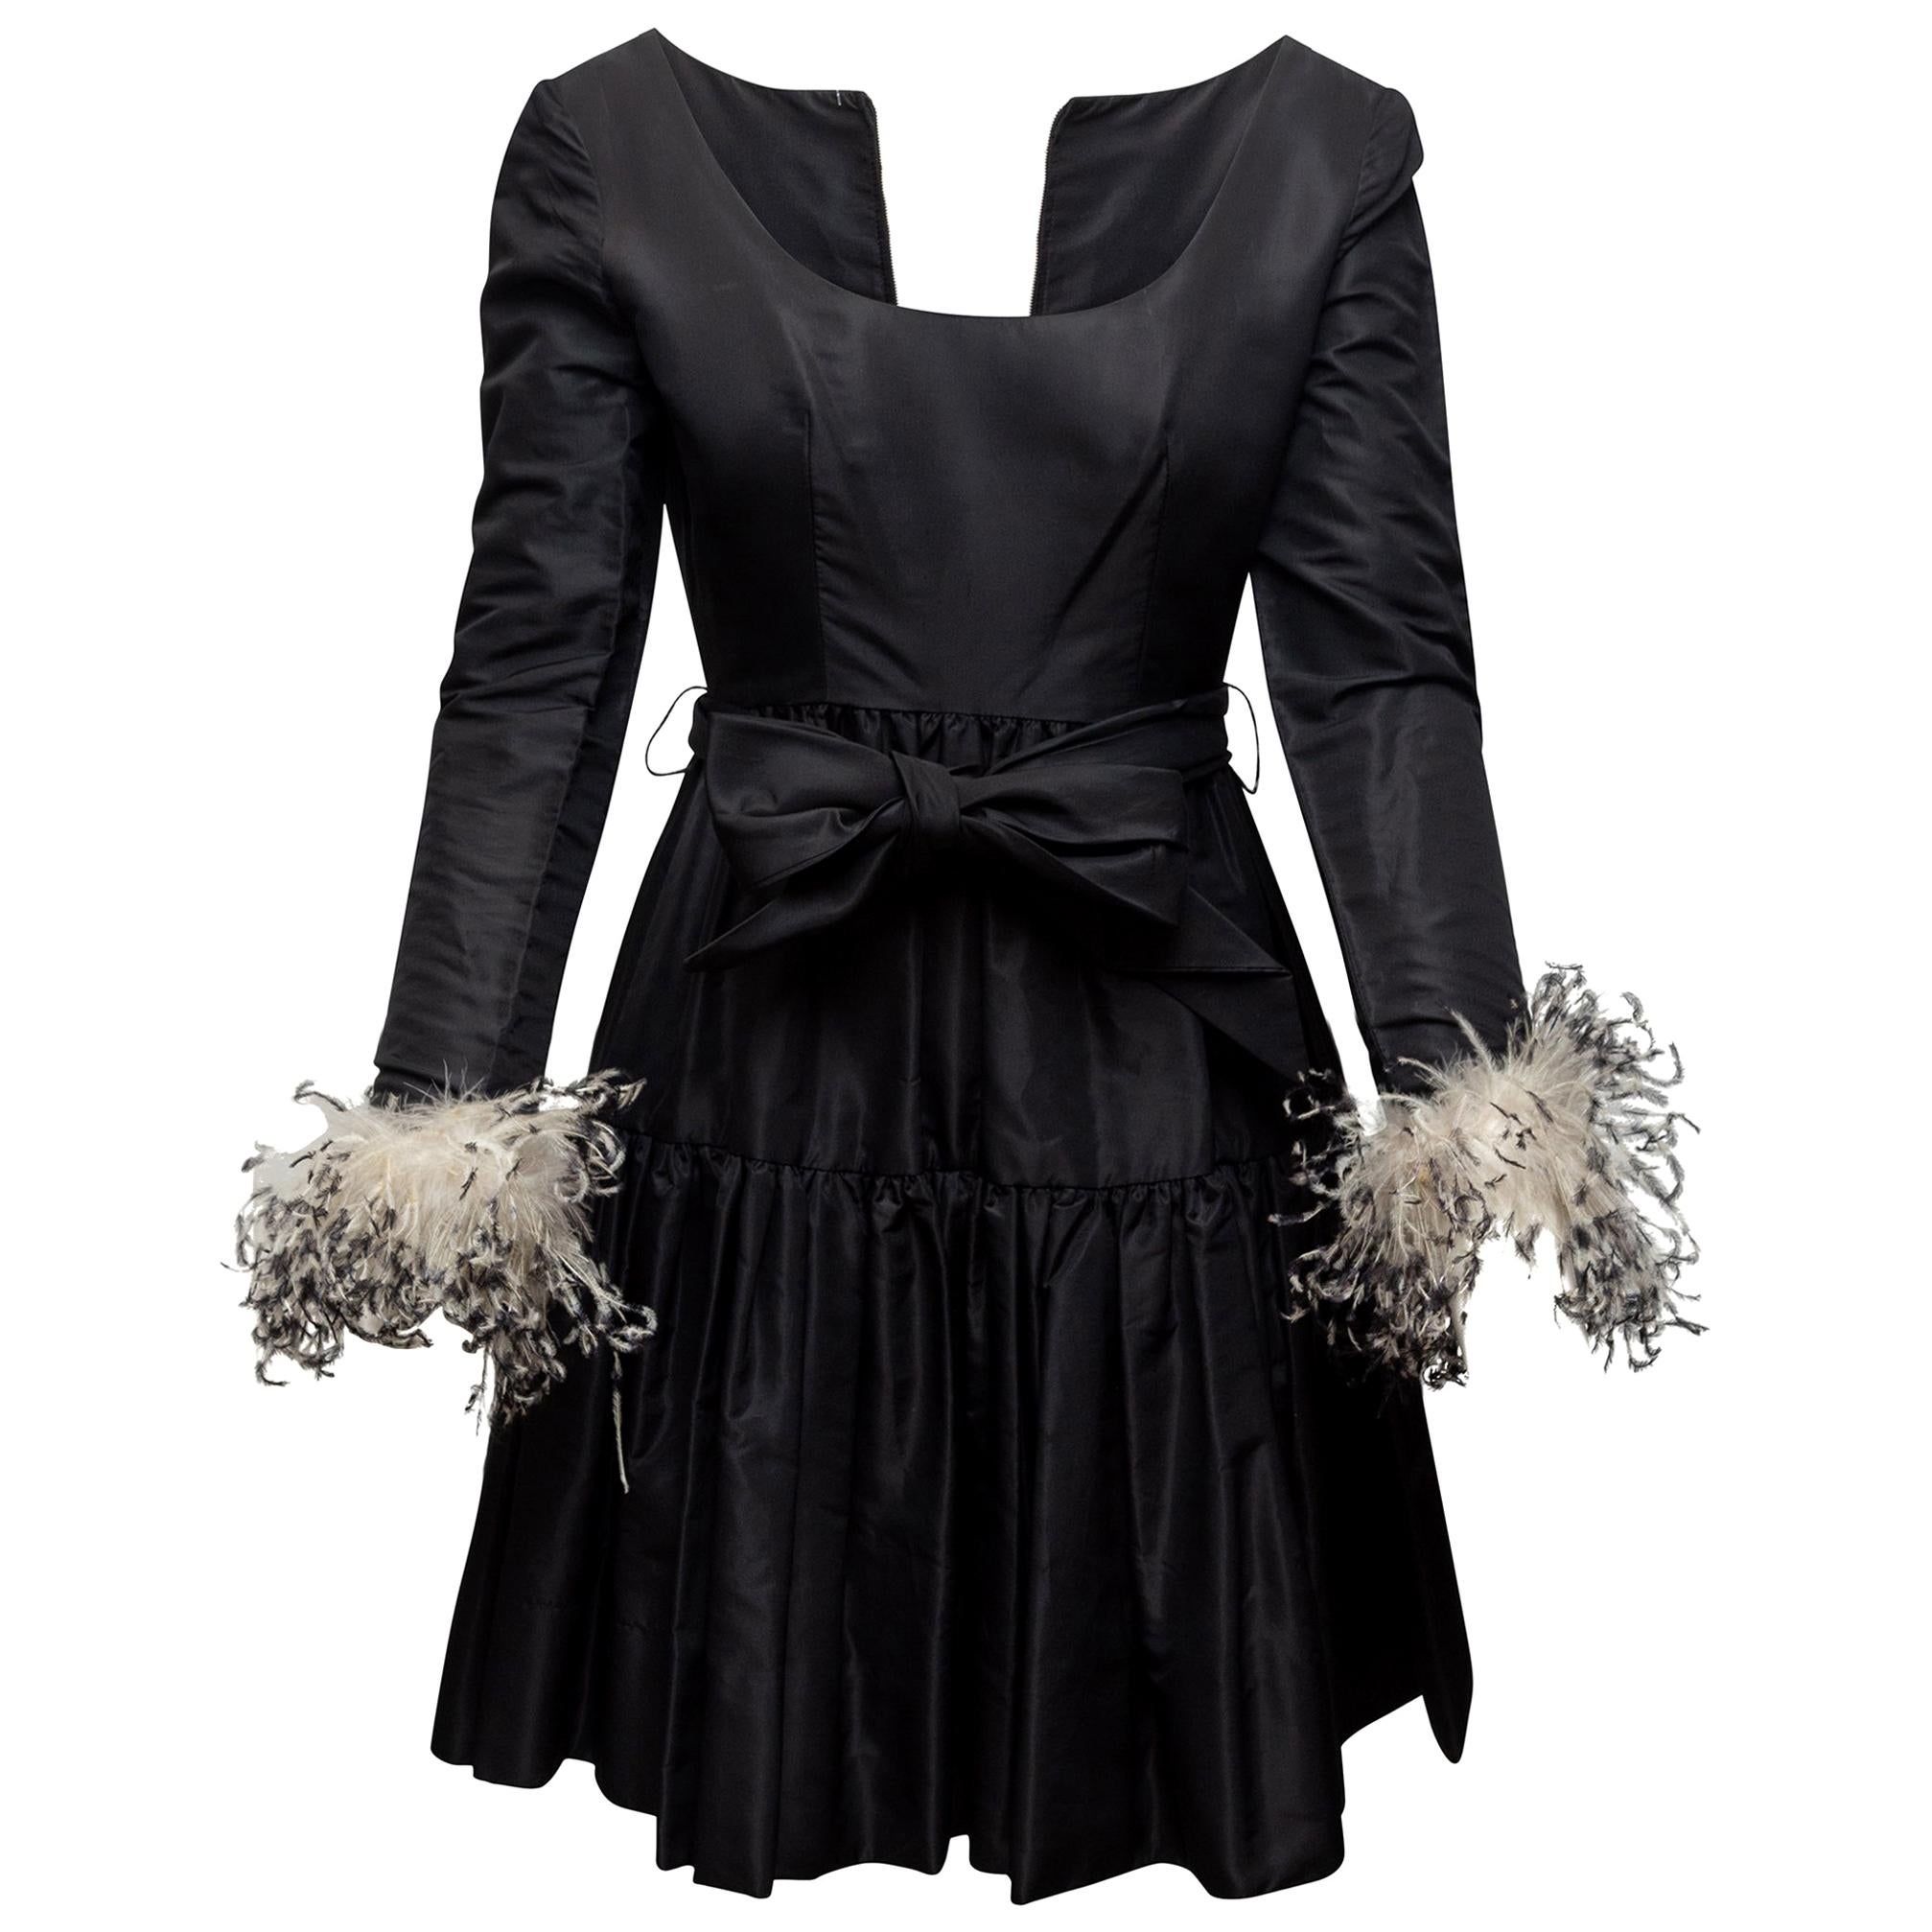 Oscar de la Renta Black Feather-Trimmed Dress